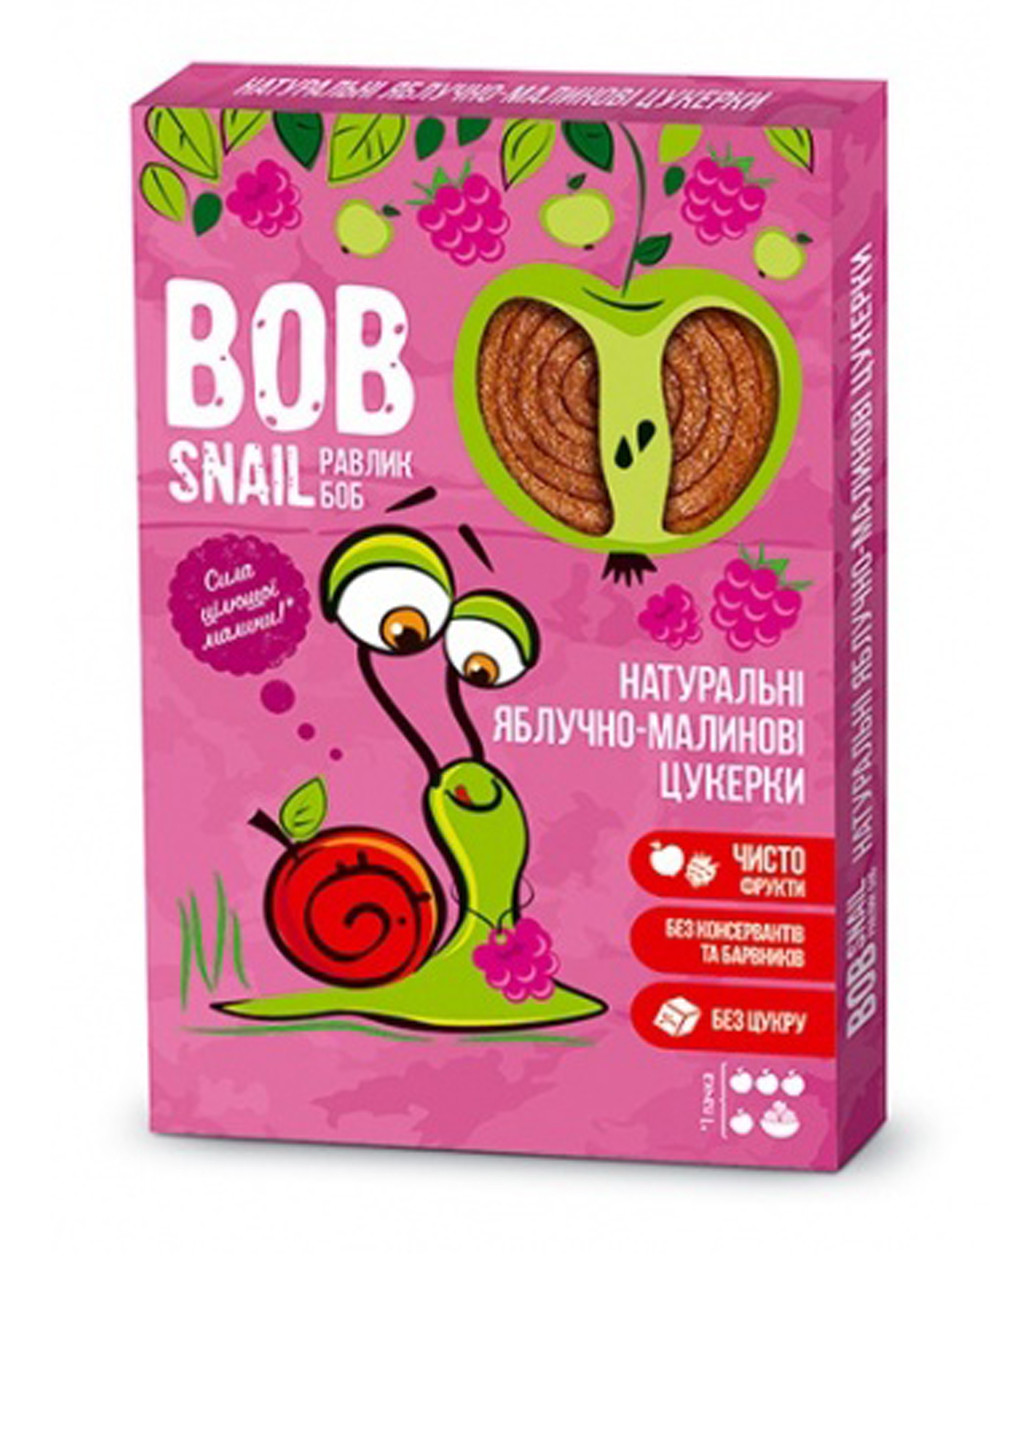 Цукерки Яблуко-Малина, 60 г Bob Snail (151220125)